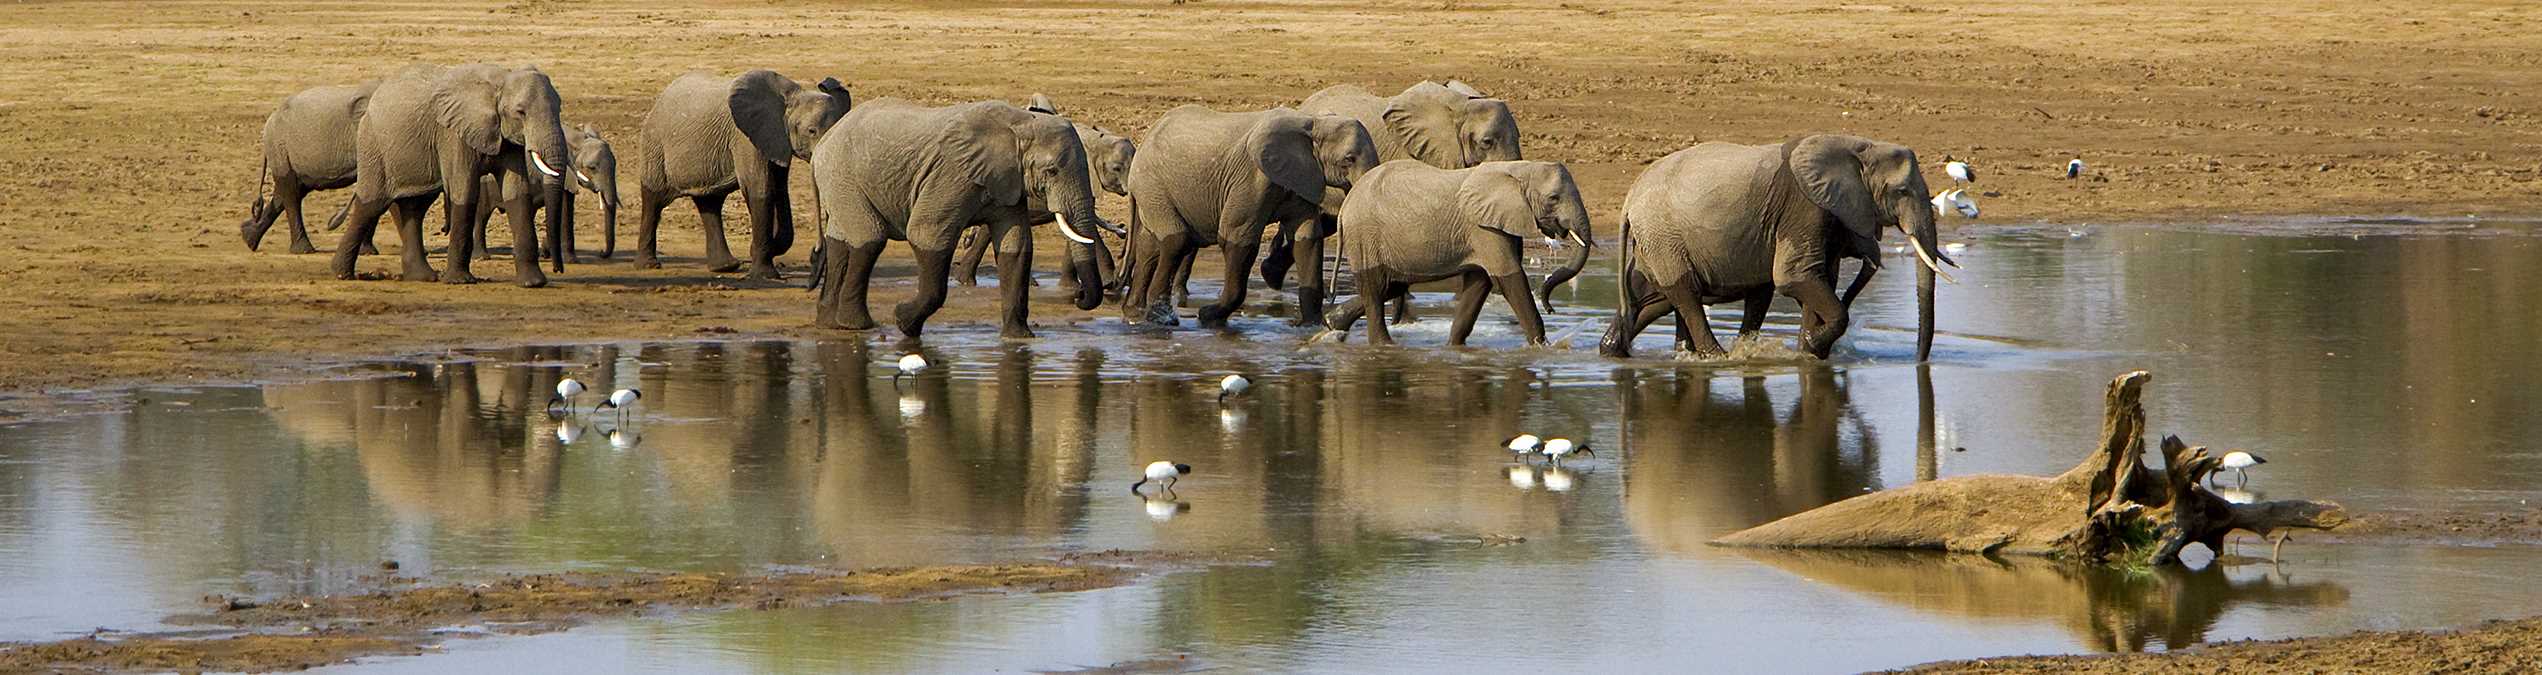 Safari Club Holidays & Tours - elephants